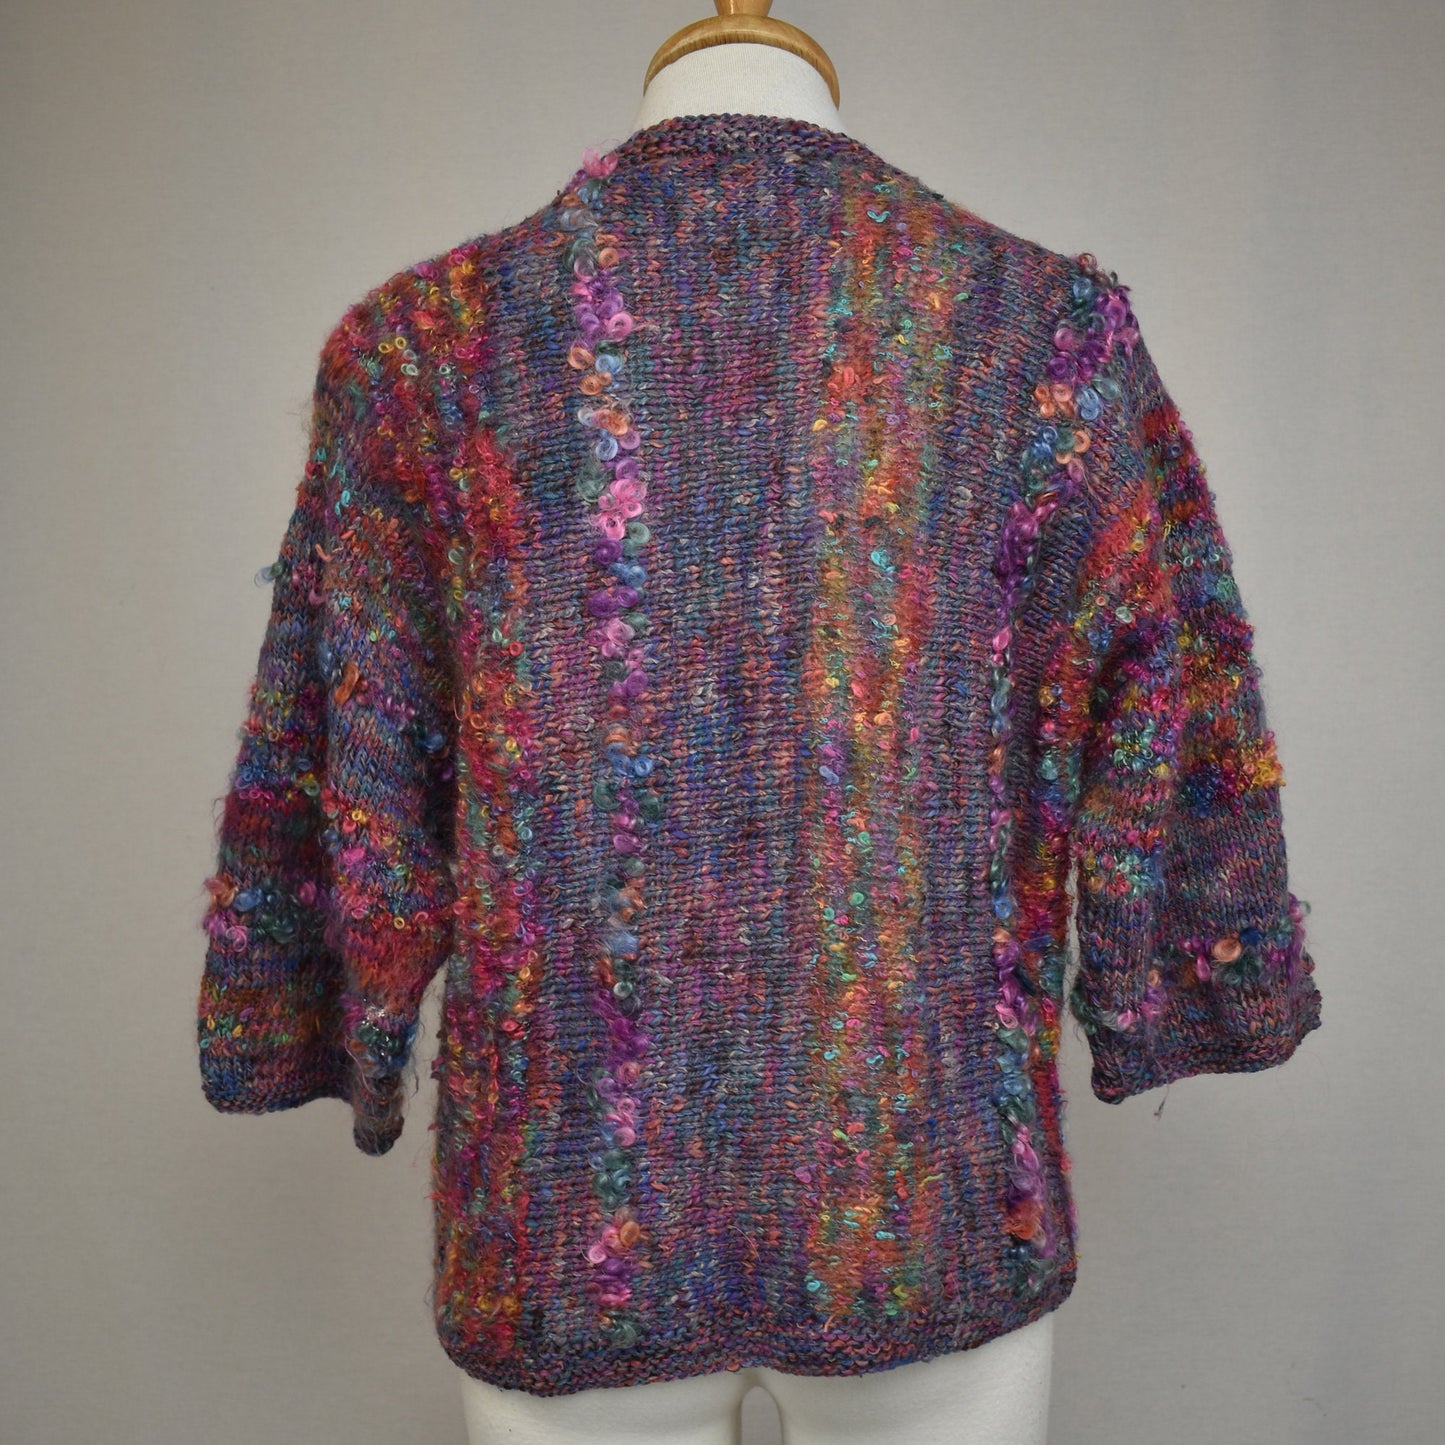 Vintage 80s Rainbow Boucle Knit Sweater - Space Dye - Crop Fit - Dolman Sleeves